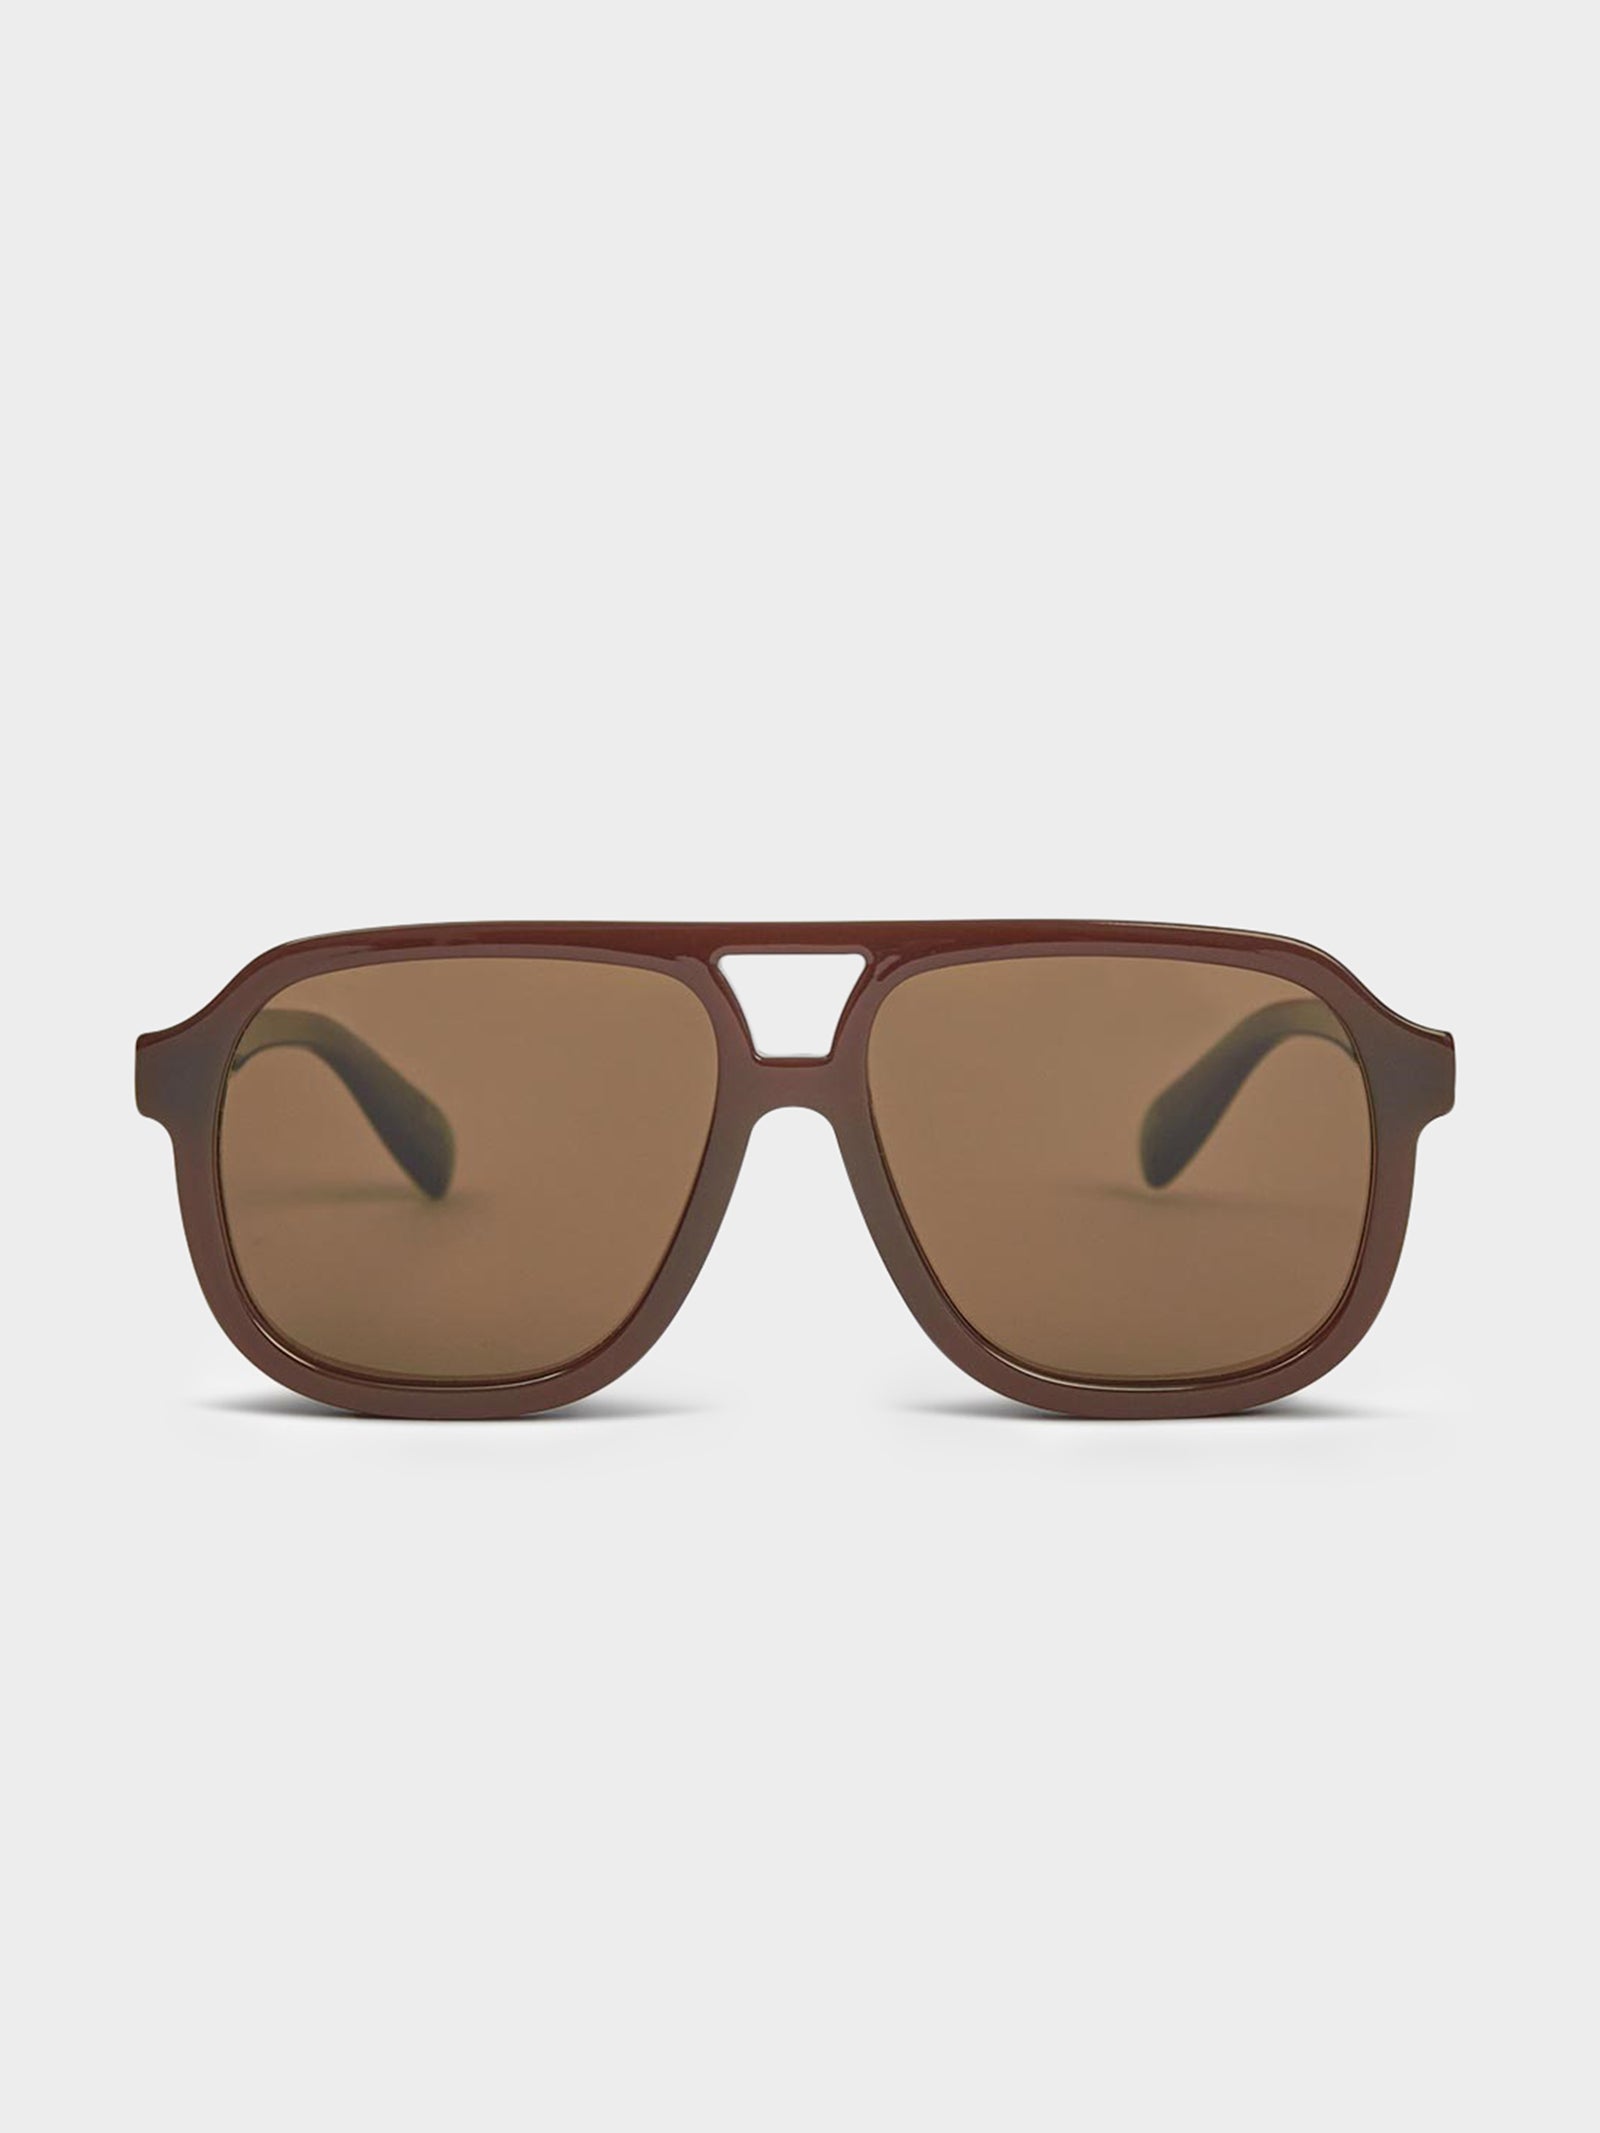 MXP Polished Sunglasses in Caramel & Dark Brown